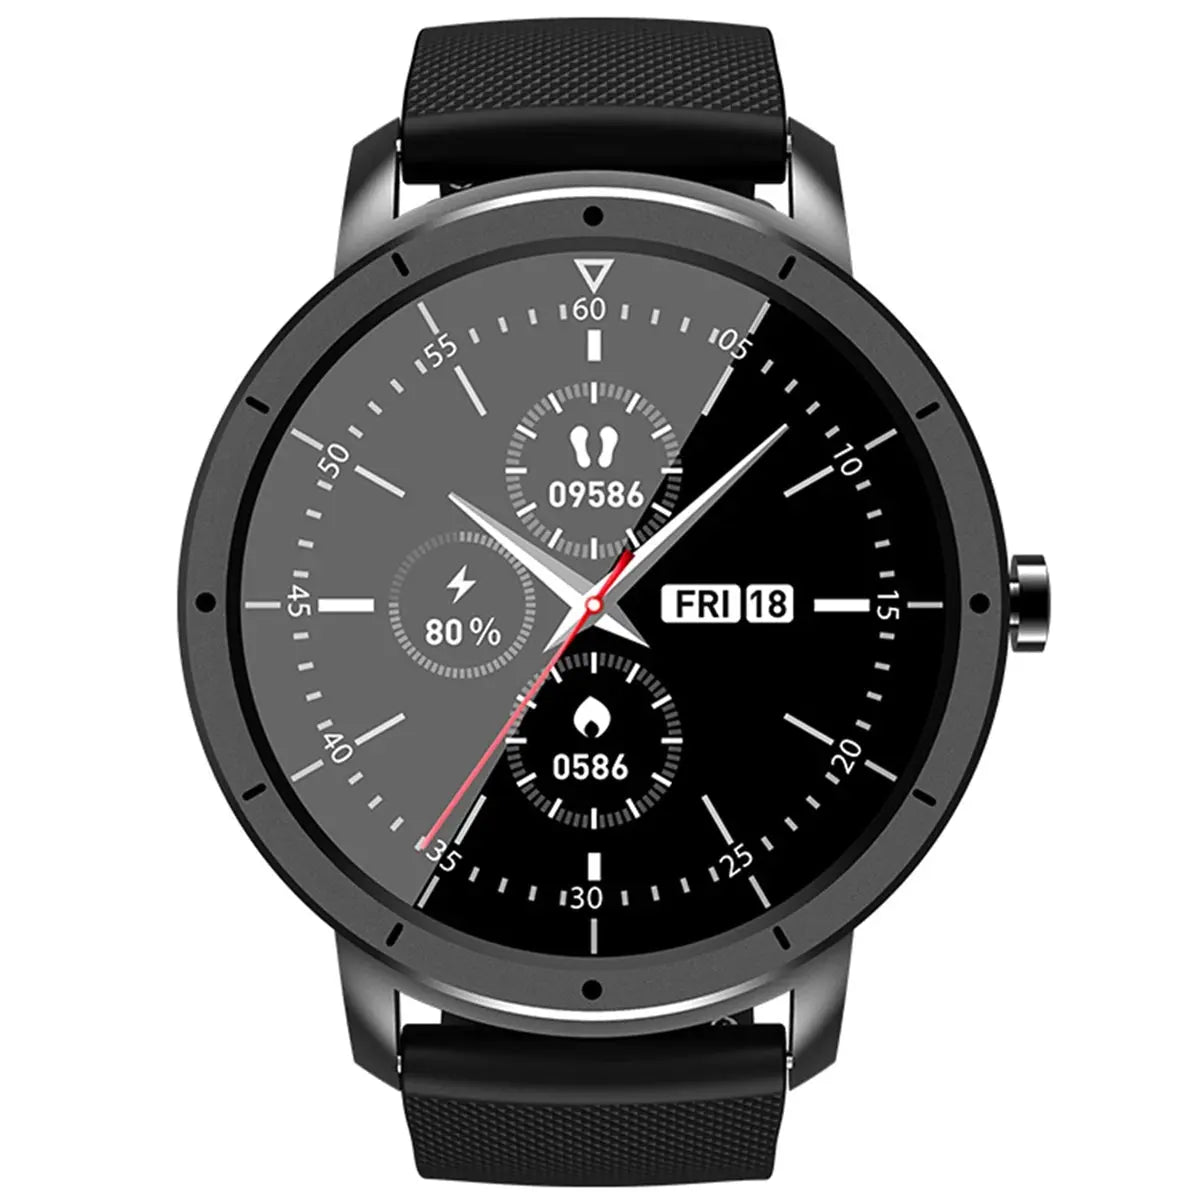 Smartwatch Reloj Inteligente Hw21 Fralugio Pantalla Táctil Redonda